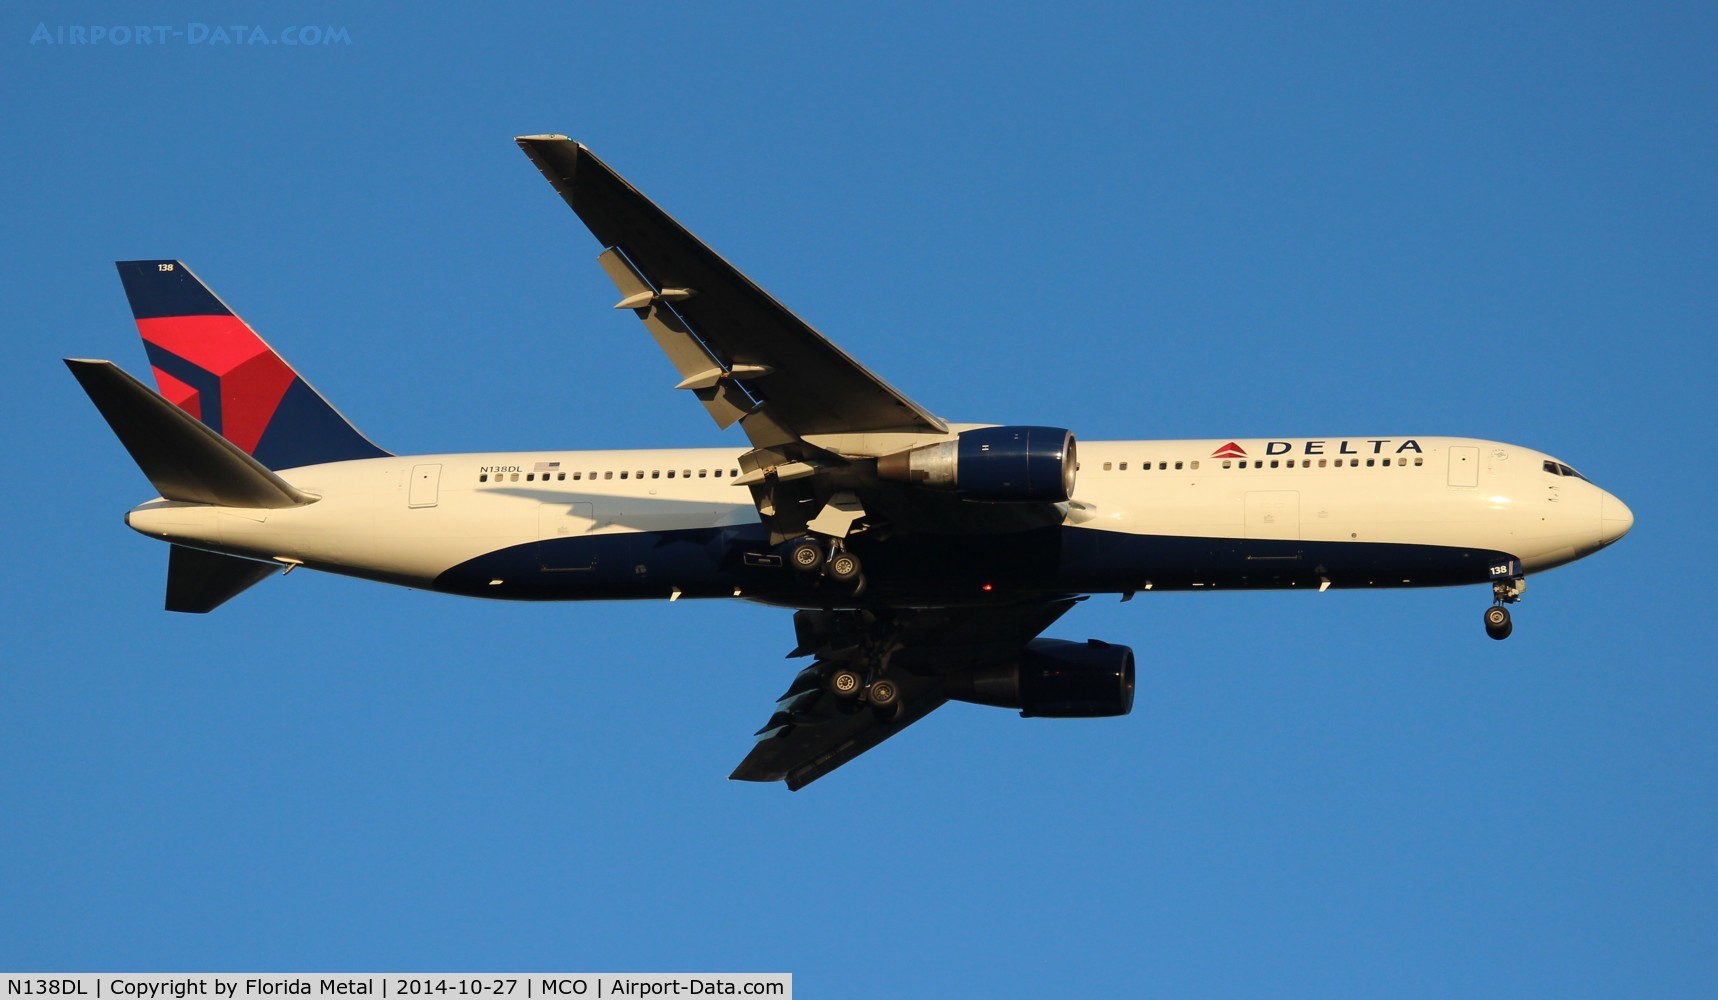 N138DL, 1991 Boeing 767-332 C/N 25409, Delta 767-300